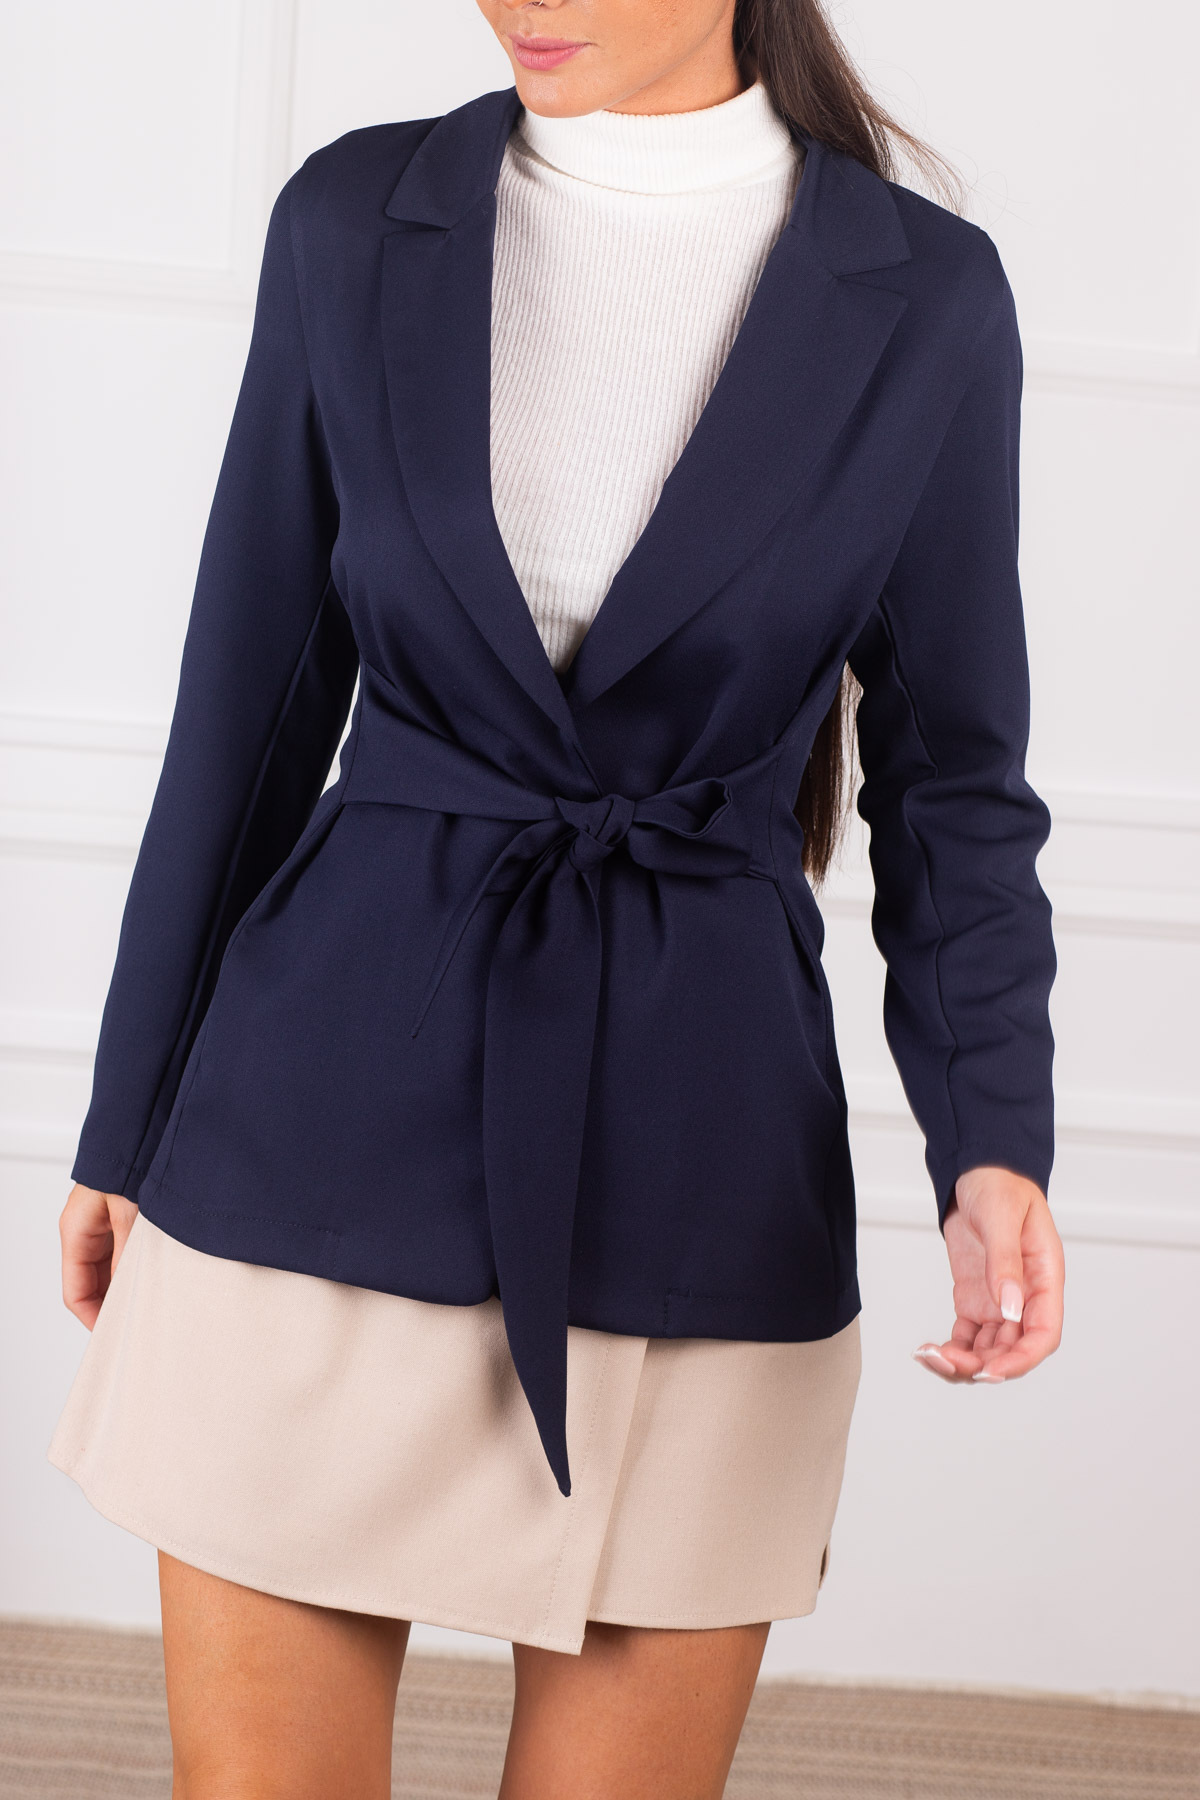 Levně armonika Women's Navy Blue Slit Sleeve Tie Front Jacket